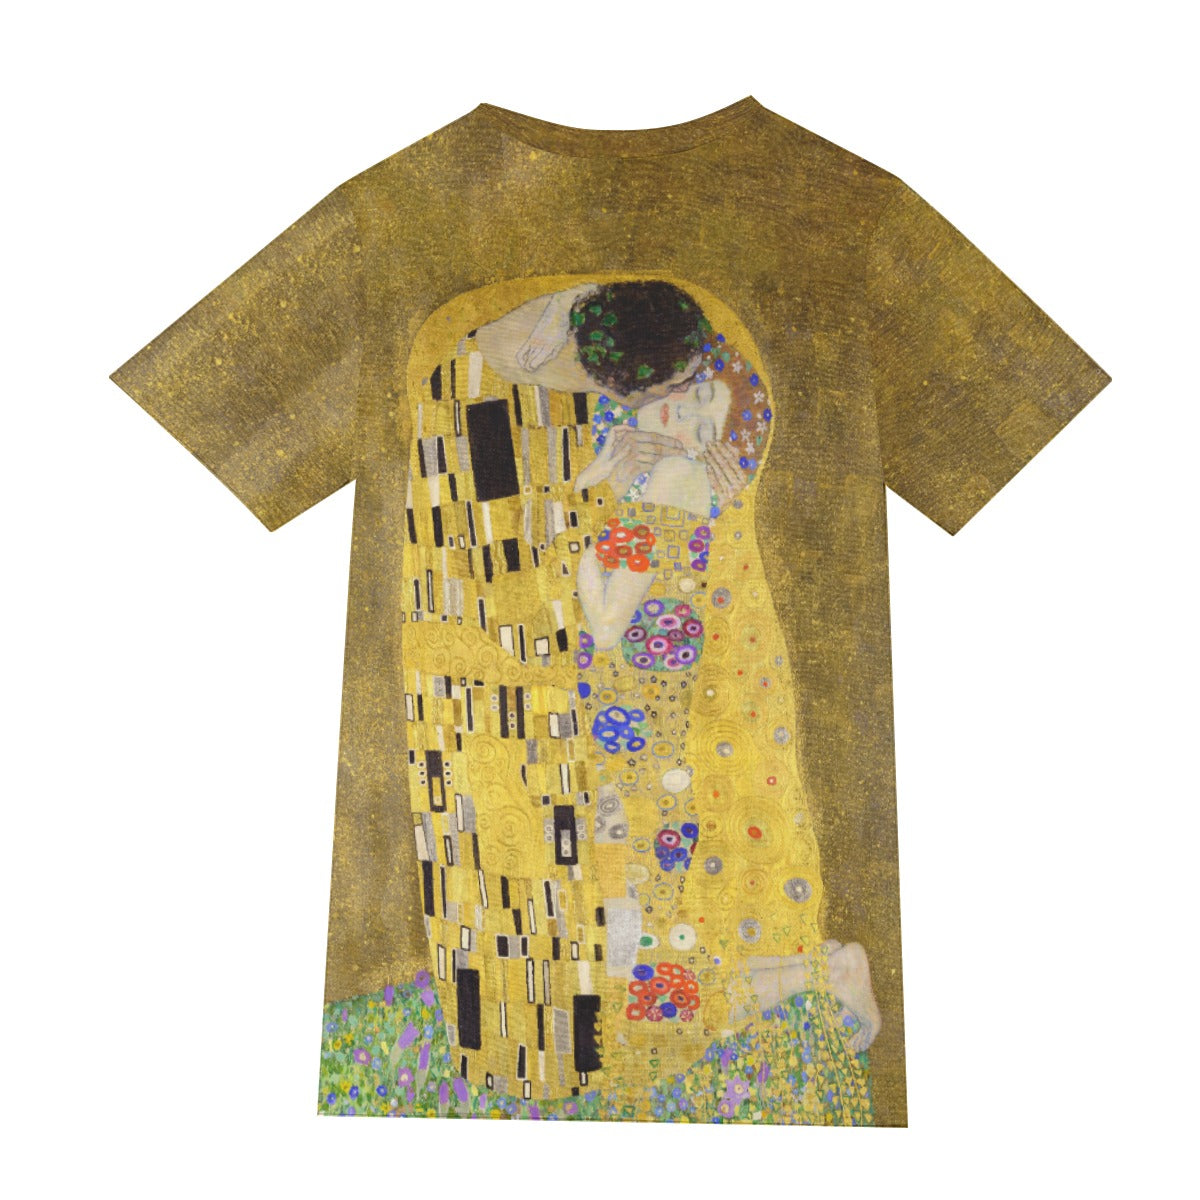 Art Inspired Clothing by Klimt